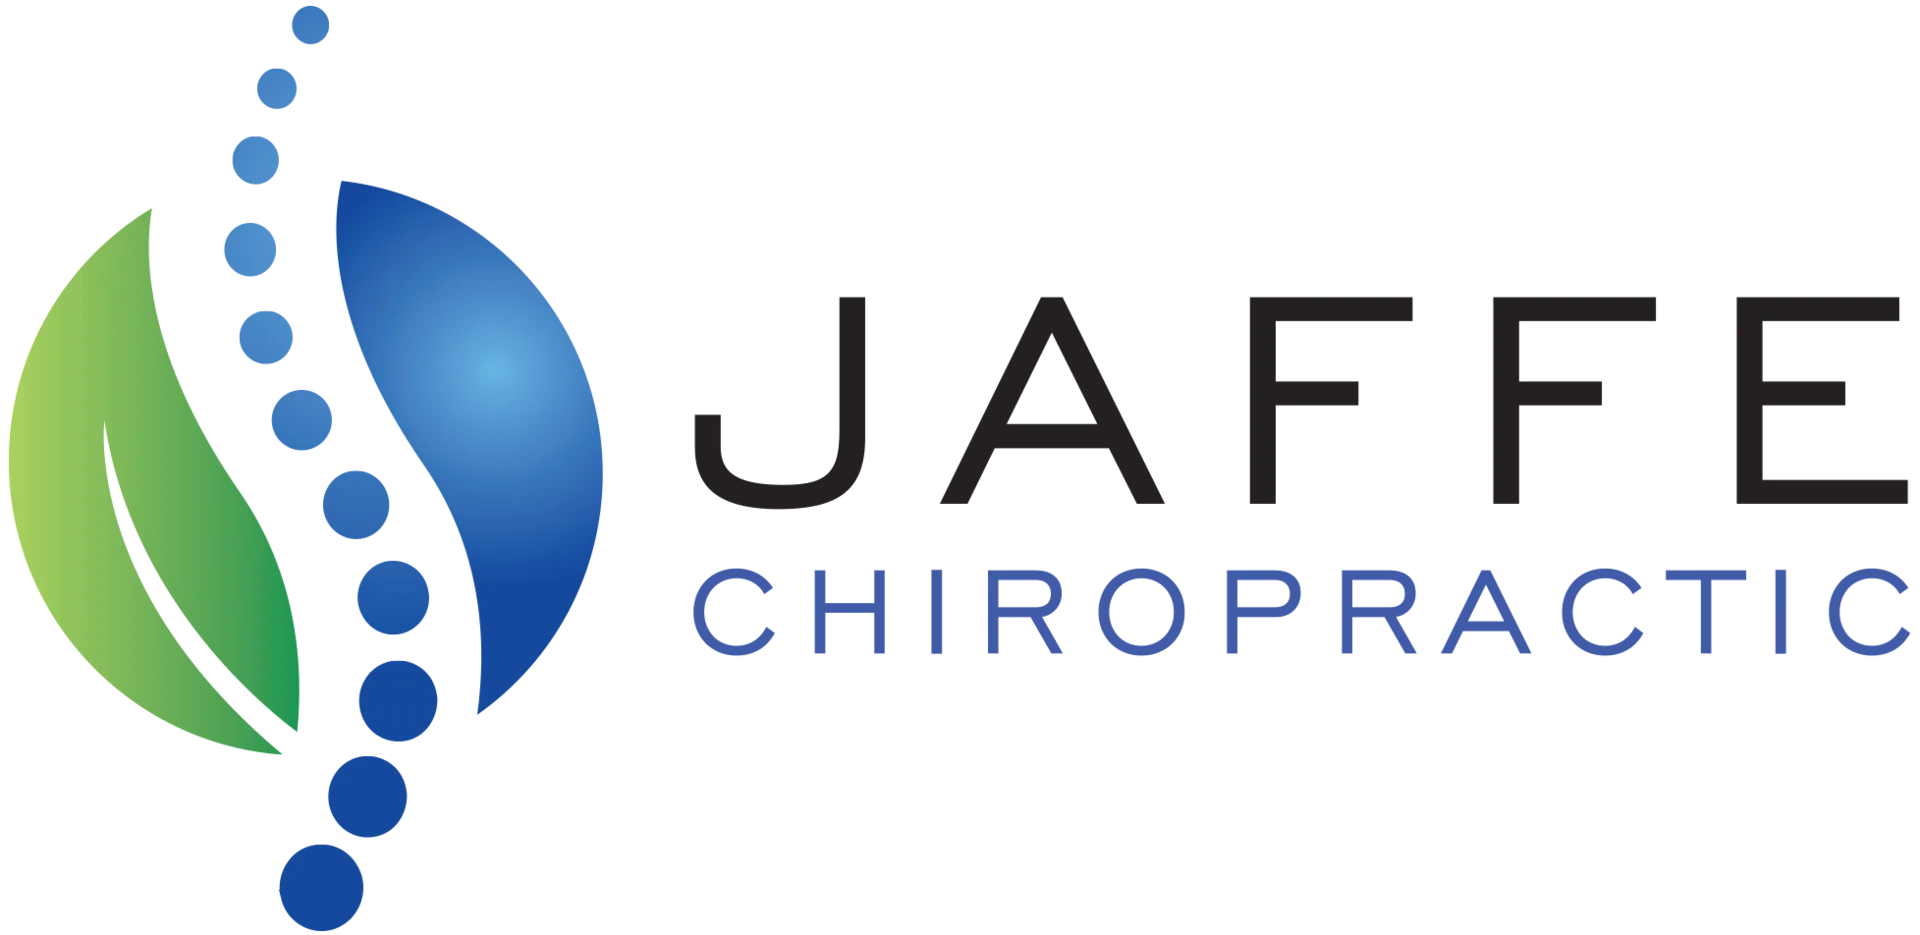 Jaffe Chiropractic